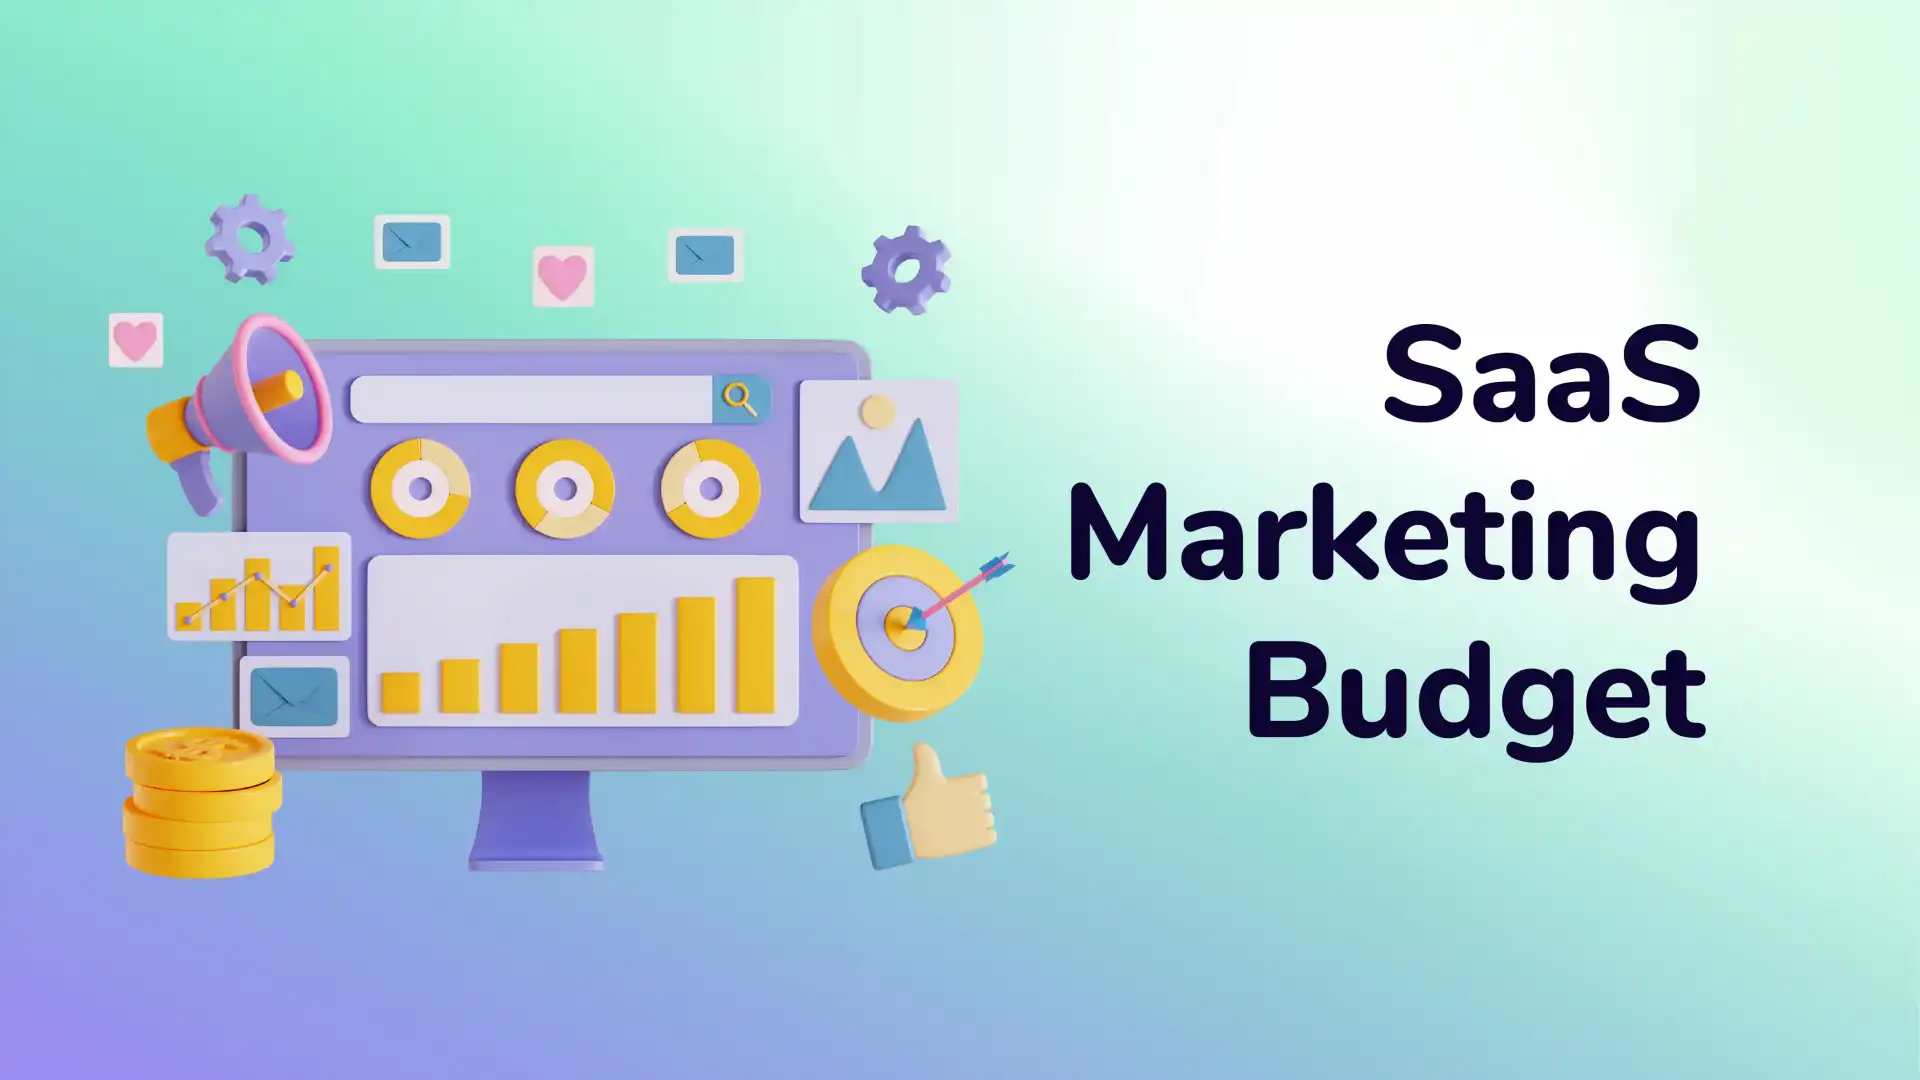 SaaS Marketing Budget